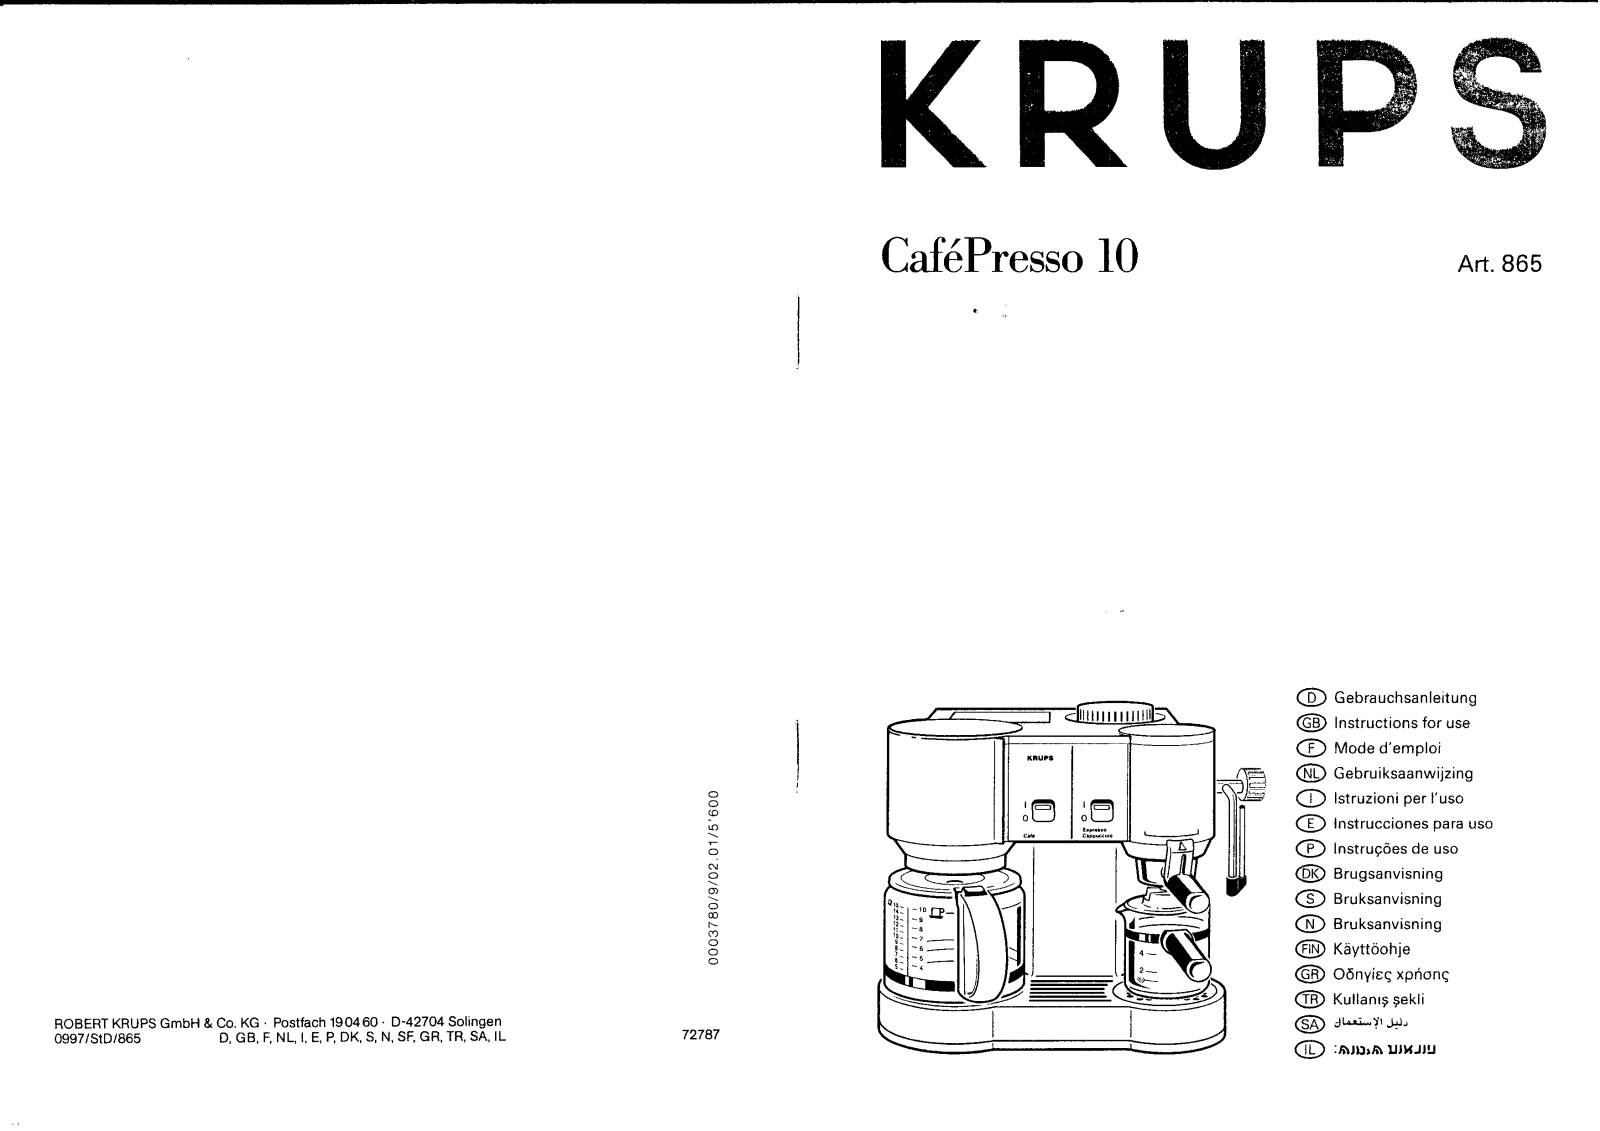 Krups F865 Manual